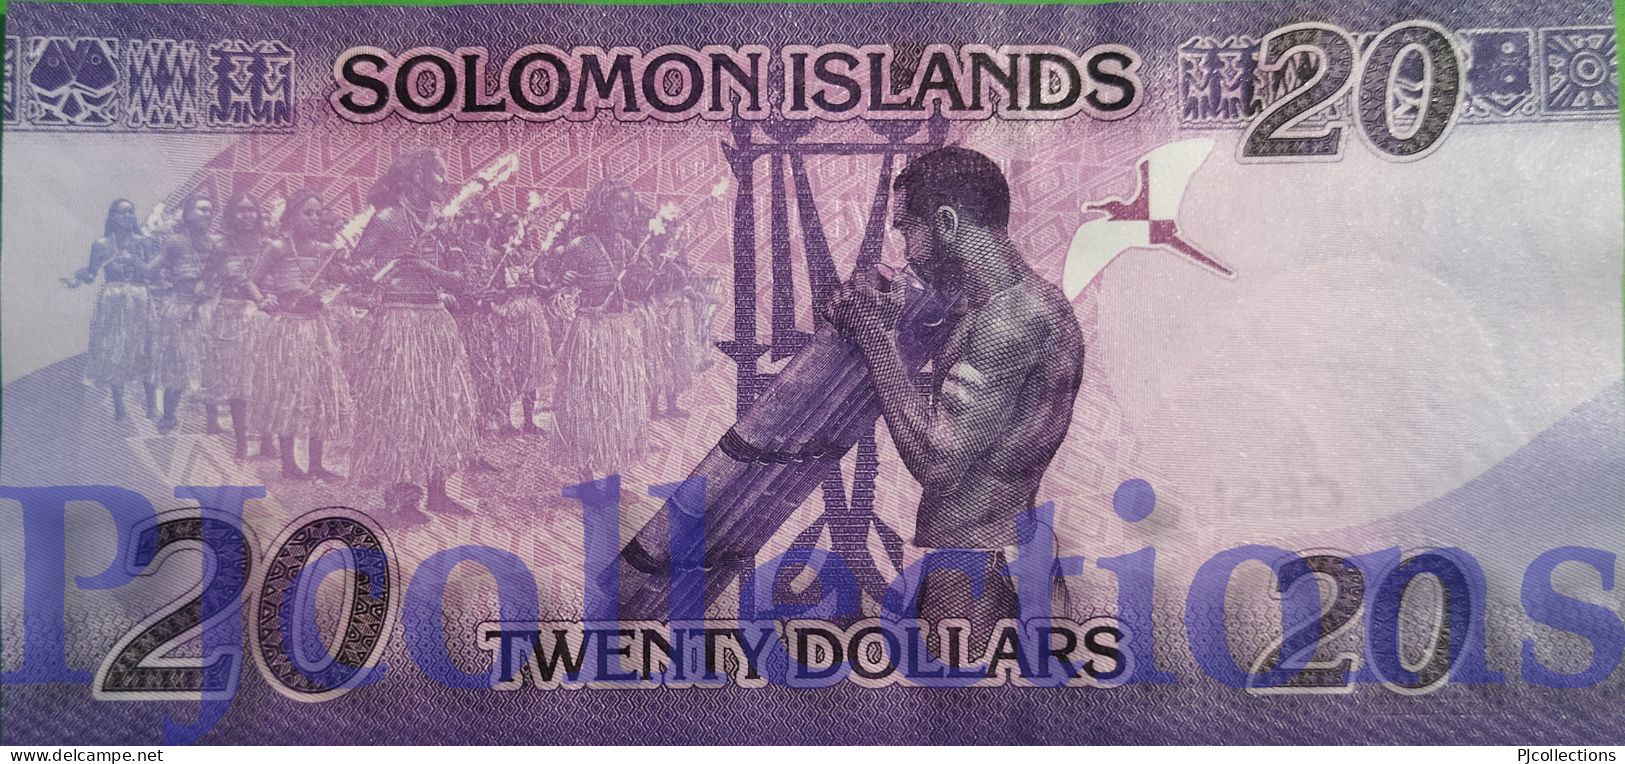 SOLOMON ISLANDS 20 DOLLARS 2017 PICK 34 UNC LOW SERIAL NUMBER "A/1 000766" - Salomons